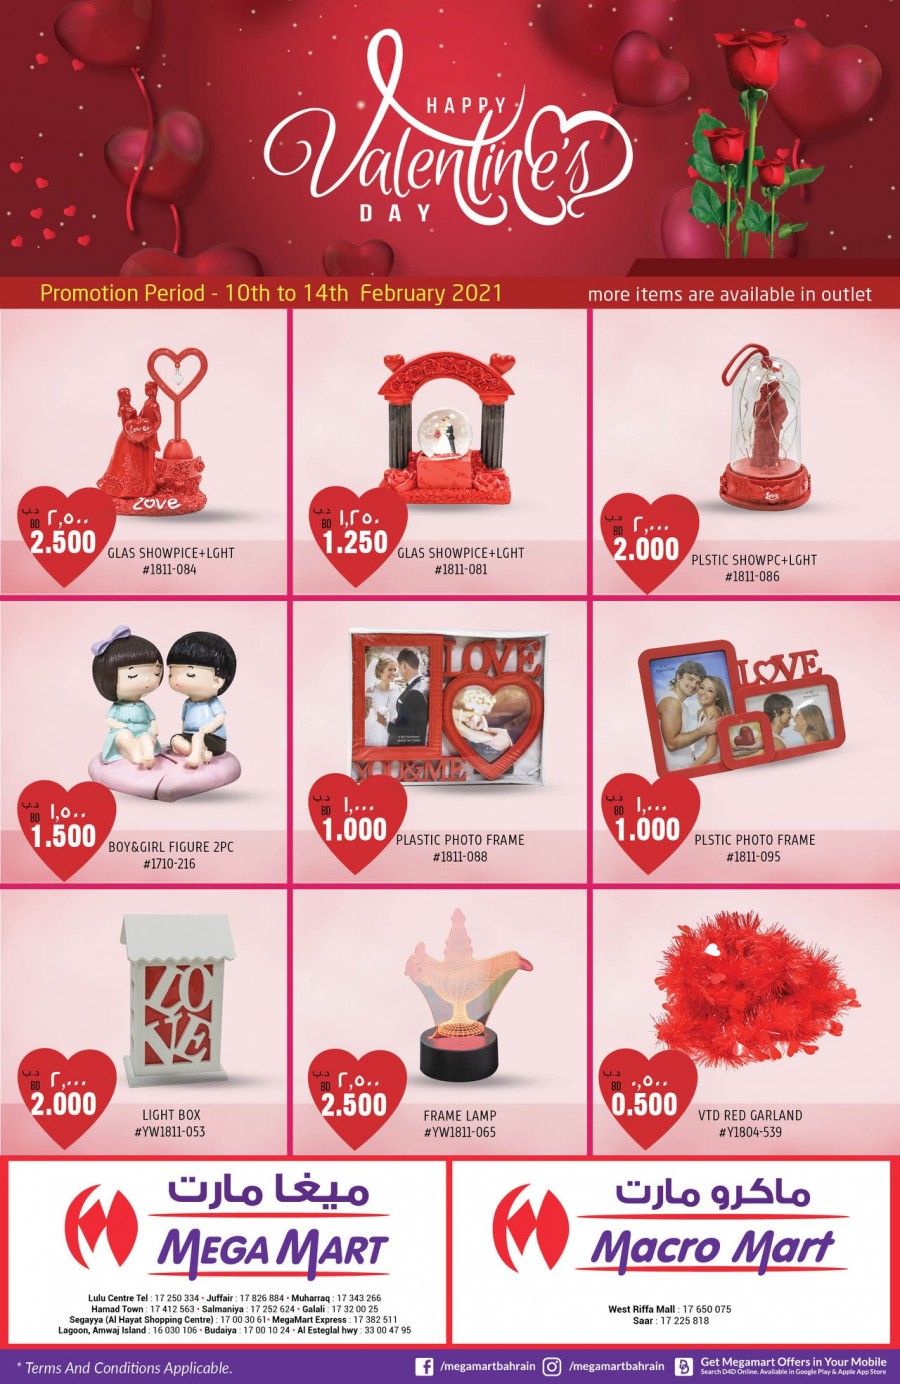 Mega Mart Valentines Day Offers